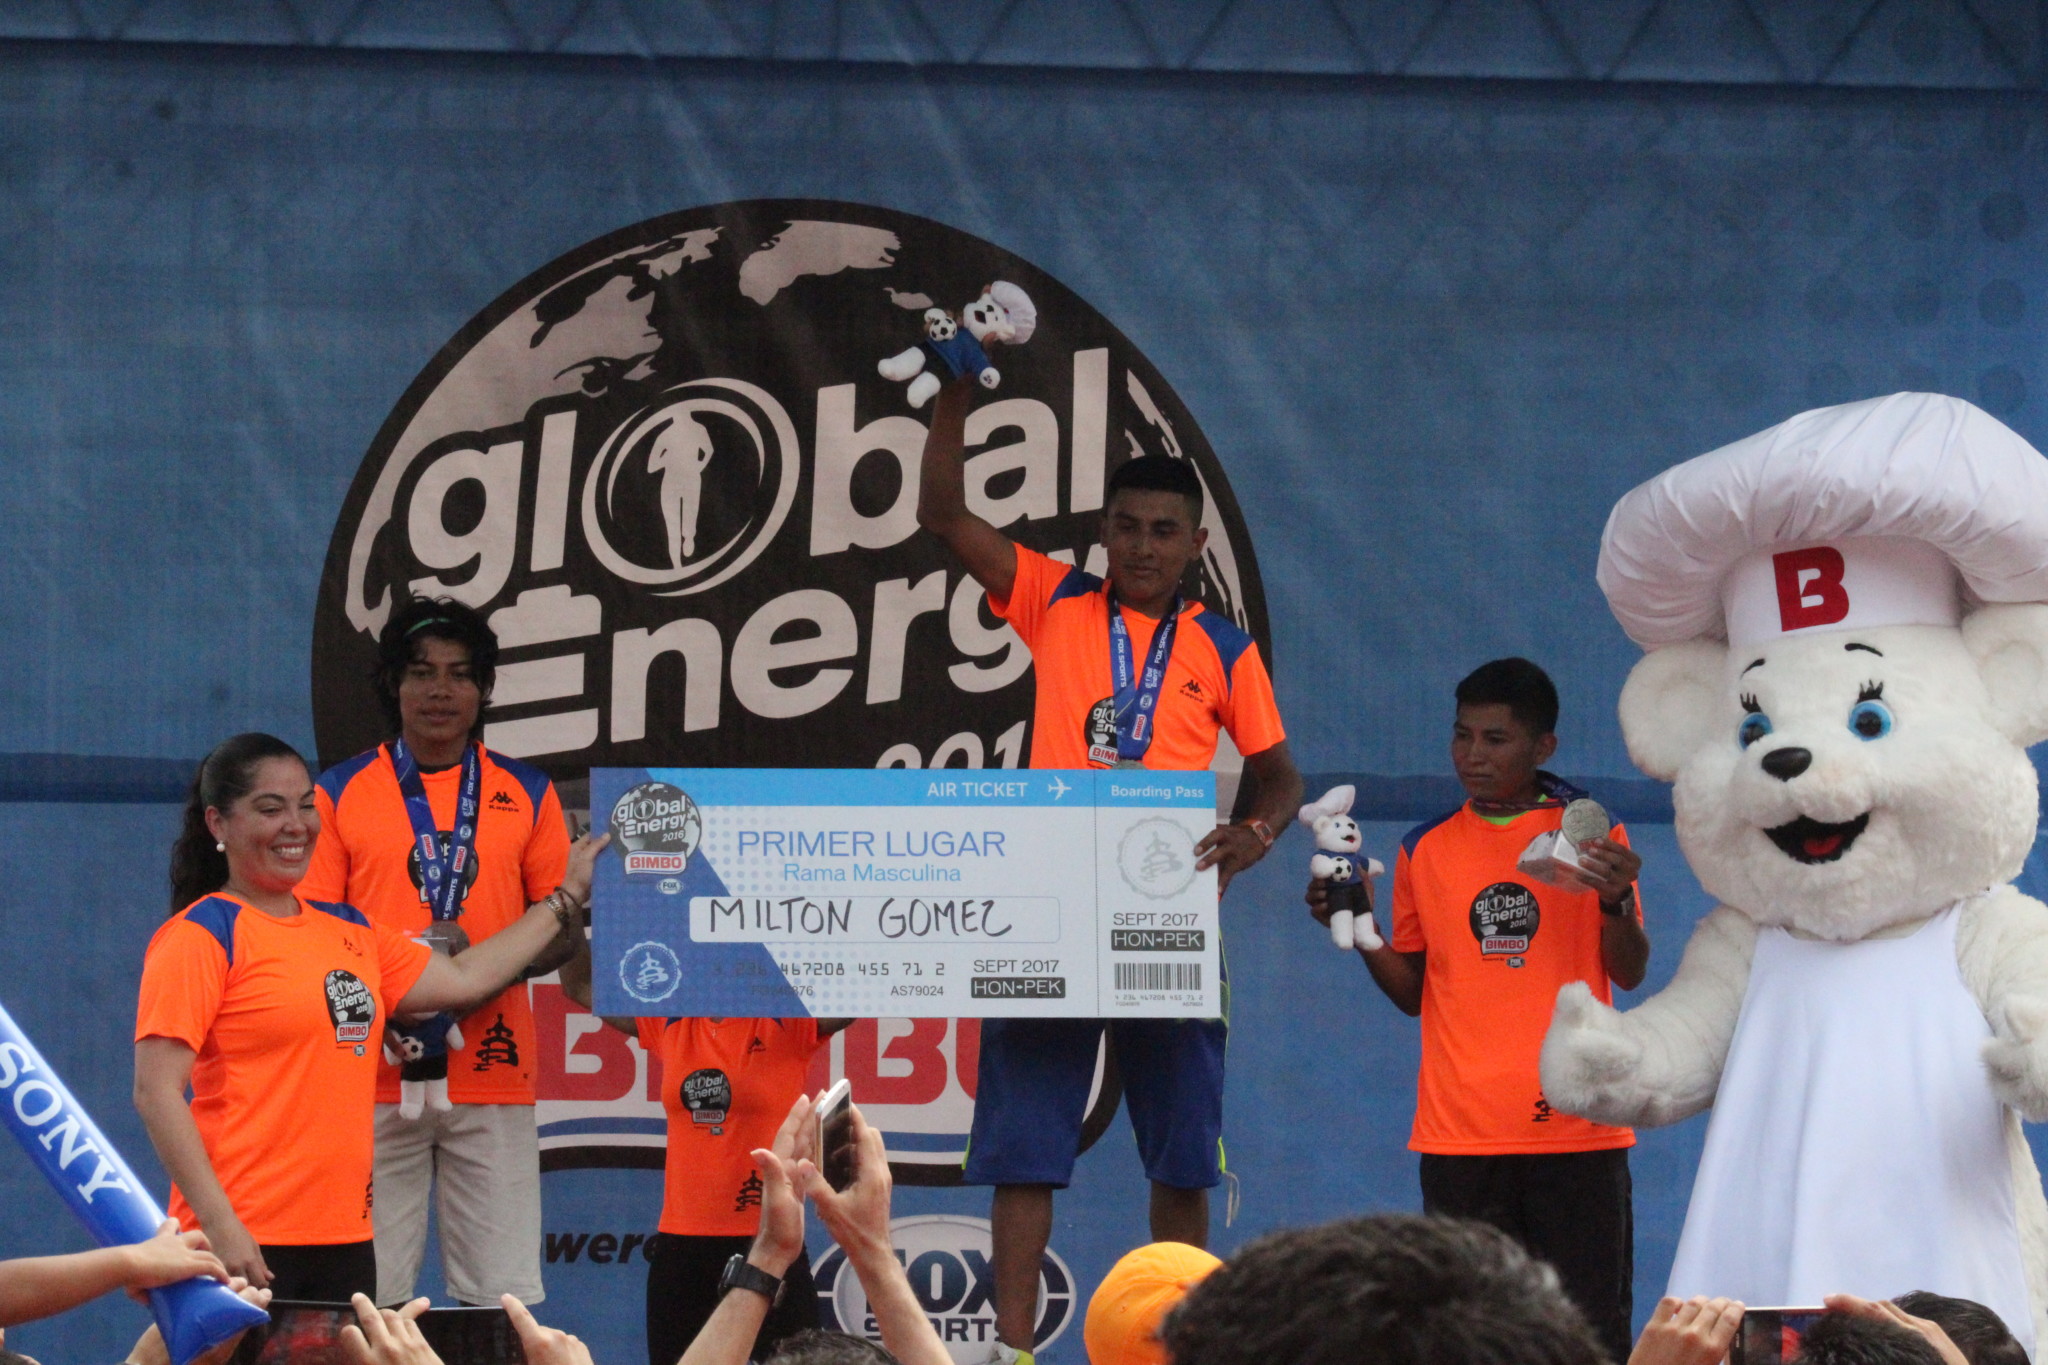 Global Energy Bimbo Race realiza exitosa carrera a beneficio del Banco de Alimentos